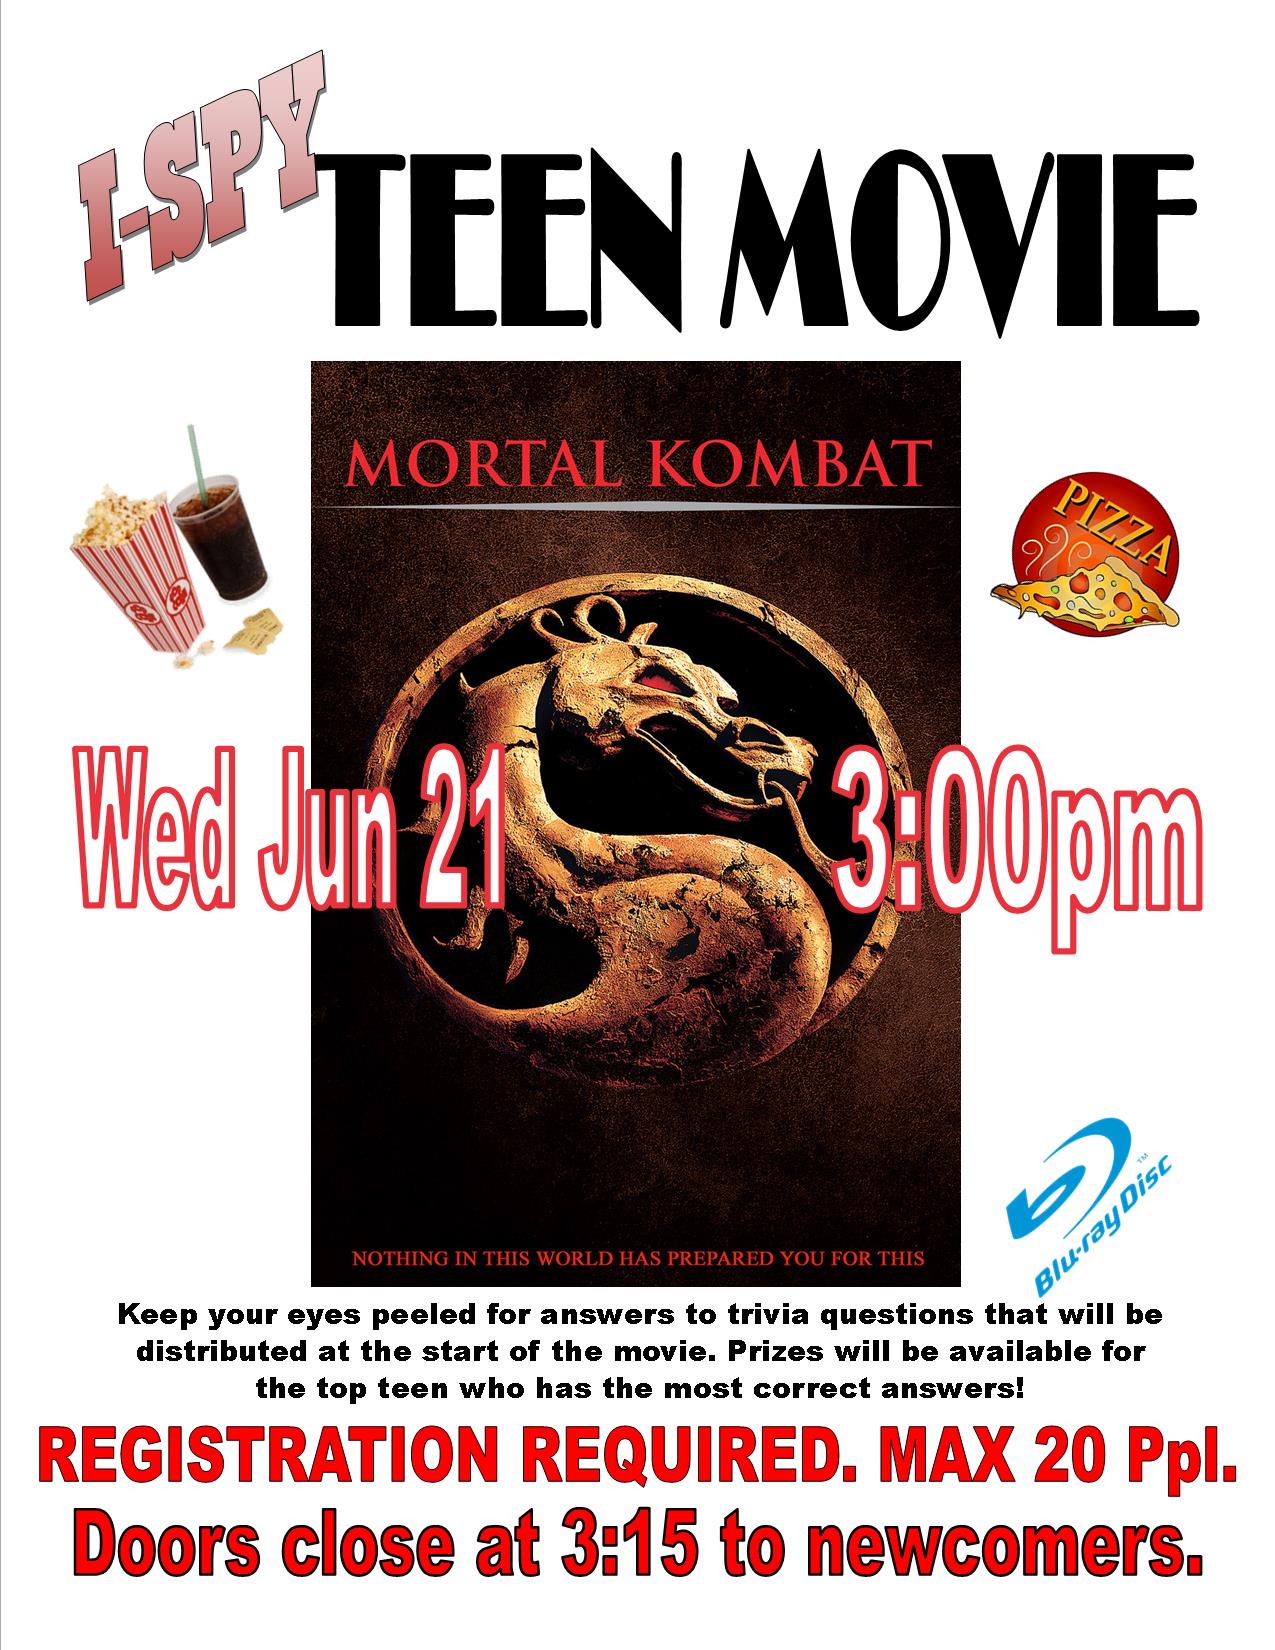 I-Spy Teen Movie: Mortal Kombat - Wed June 21 at 3pm